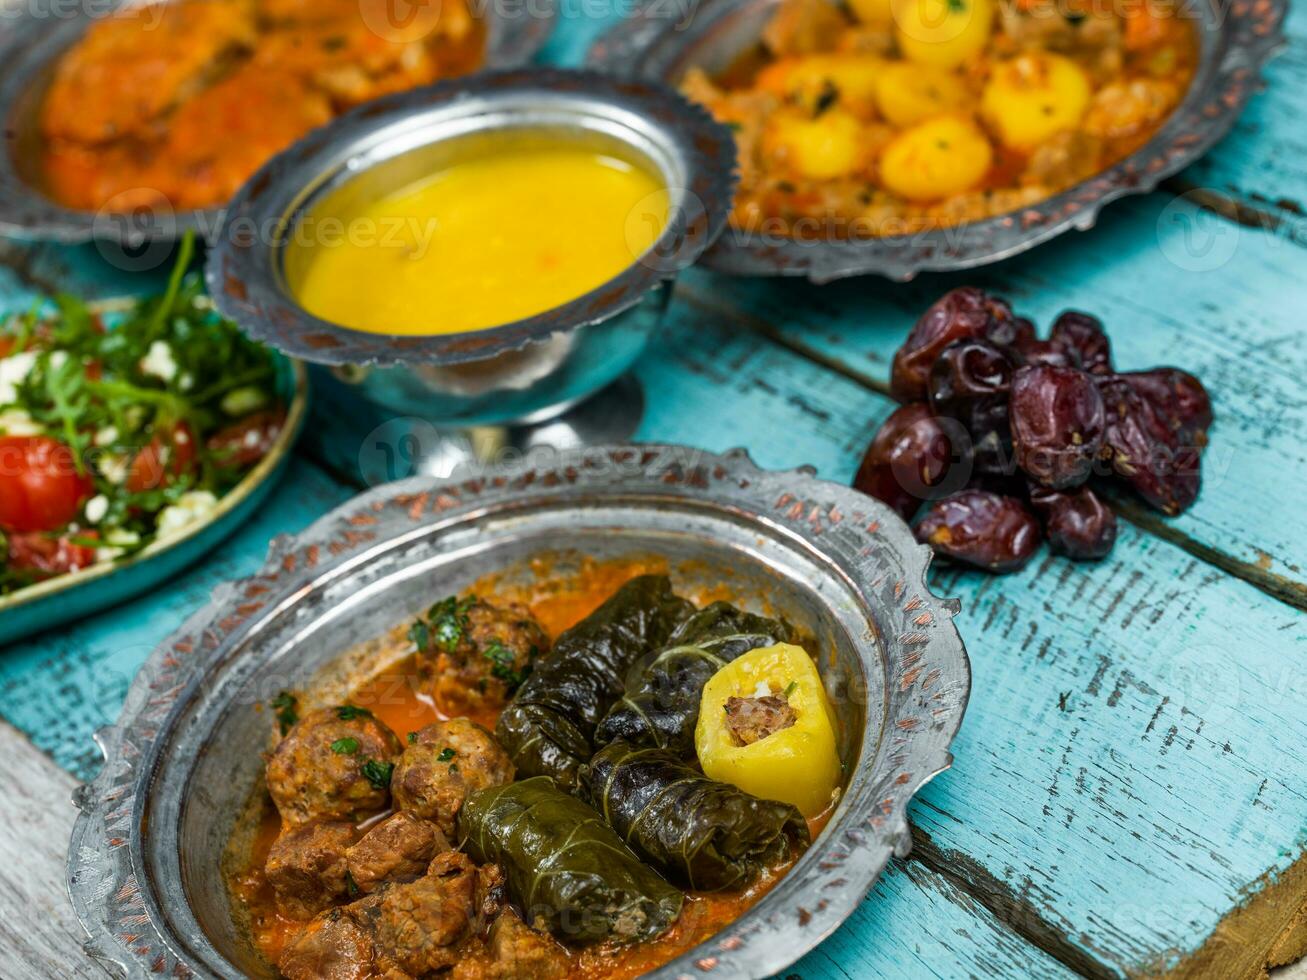 Eid Mubarak Traditional Ramadan Iftar dinner. Assorted tasty food in authentic rustic dishes on wooden blue background. Turkish Bosnian food meat kebab, pita, Sarma, klepe, sogan dolma. photo